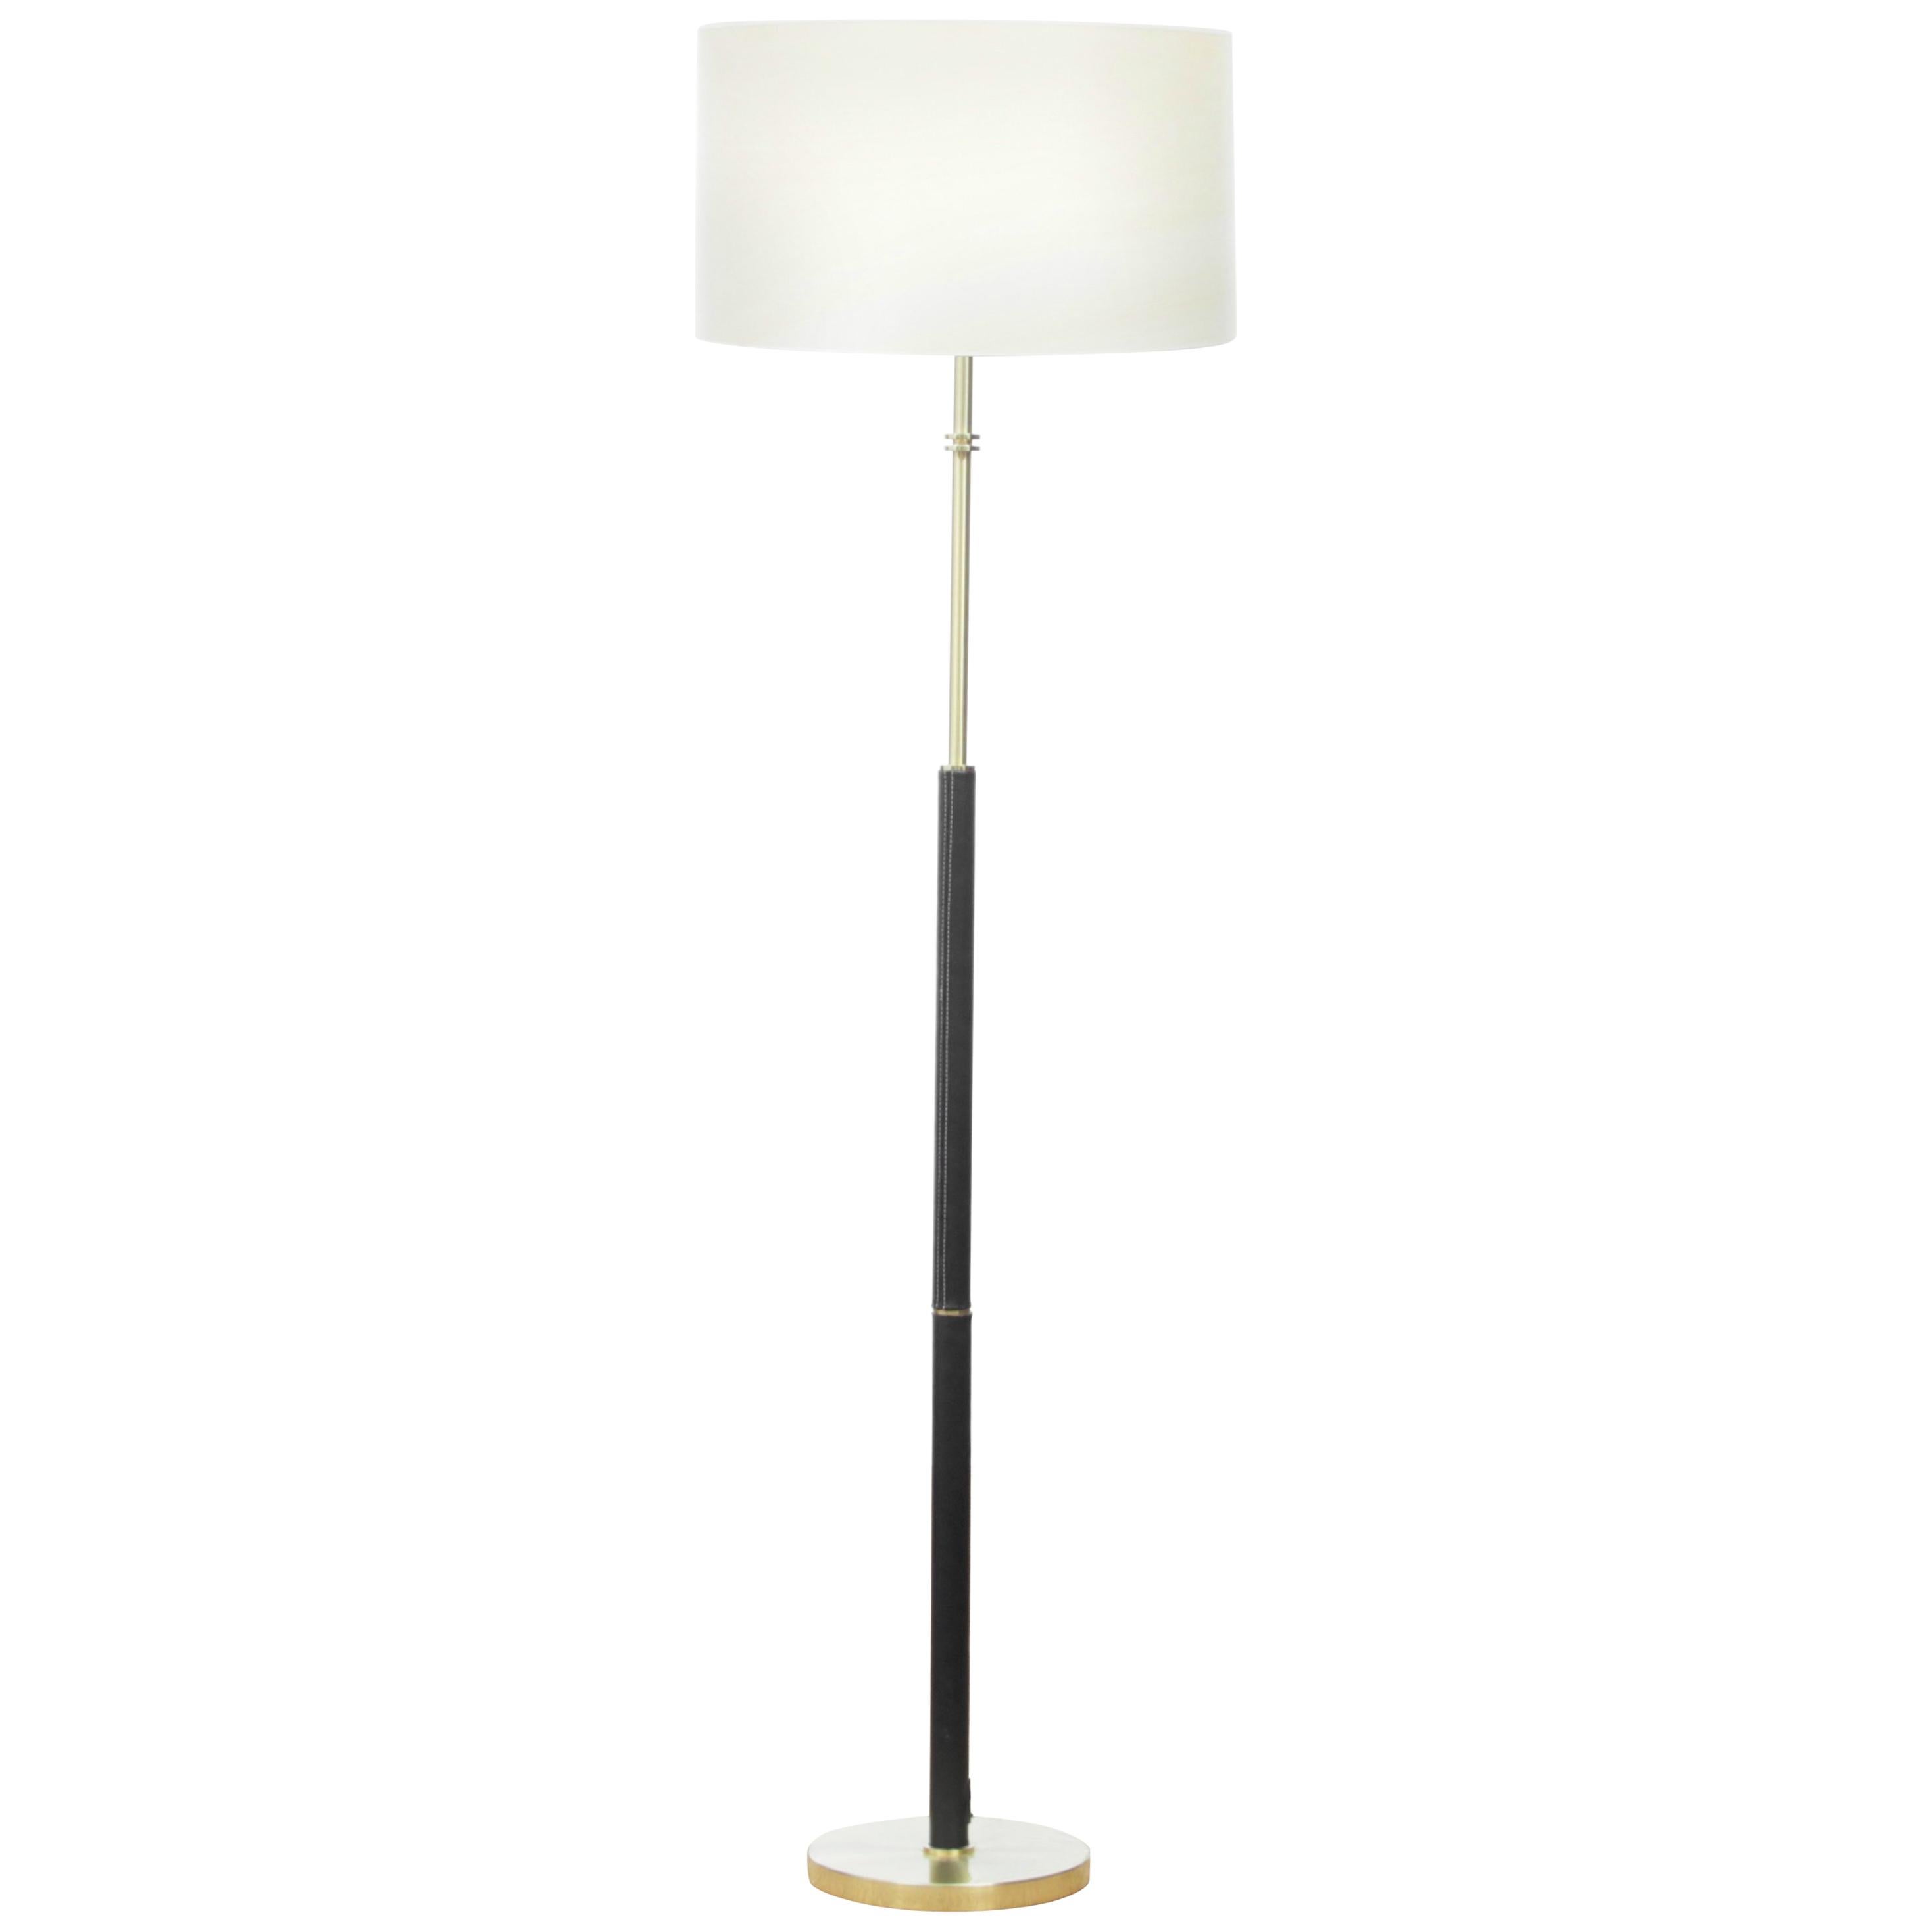 Mid-Century Modern Scandinavian Floor Lamp in Brass and Leather